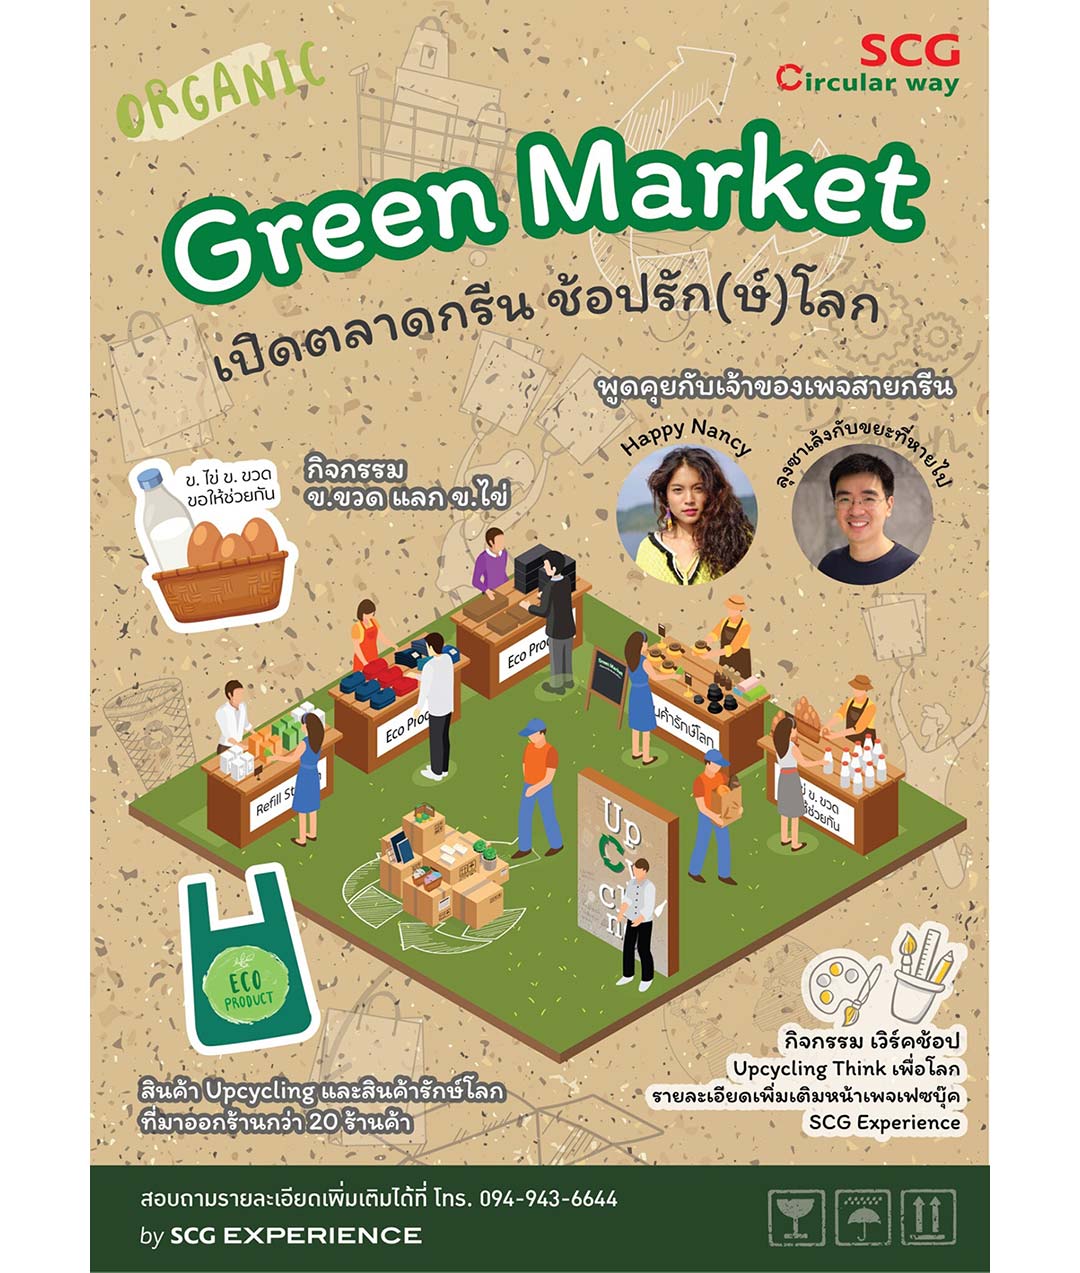 Green Market เปิดตลาดช้อปรัก(ษ์)โลก